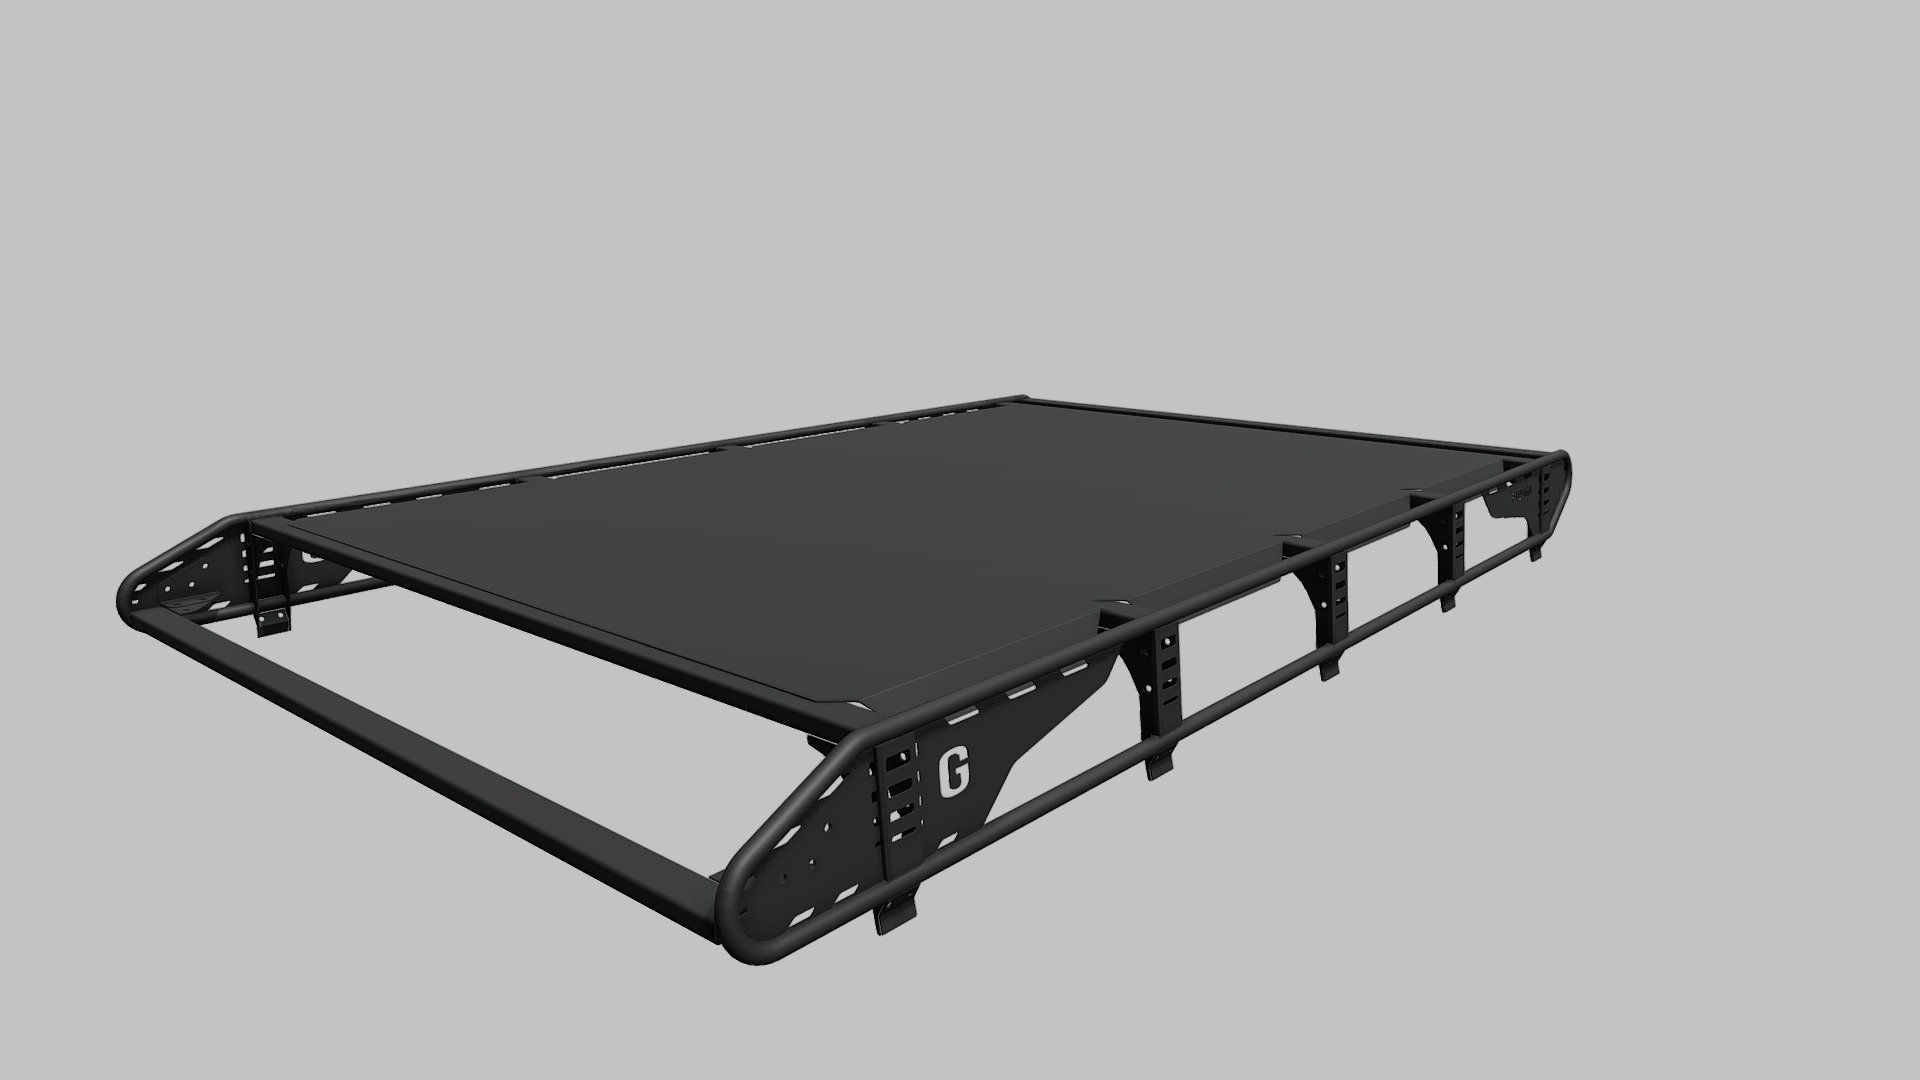 http://f-design.ru/products/bagazhnik-mercedes-benz-g-klass - Roof rack F-DESIGN Mercedes-Benz G-Class - 3D model by F-DESIGN (@vsolin) 3d model